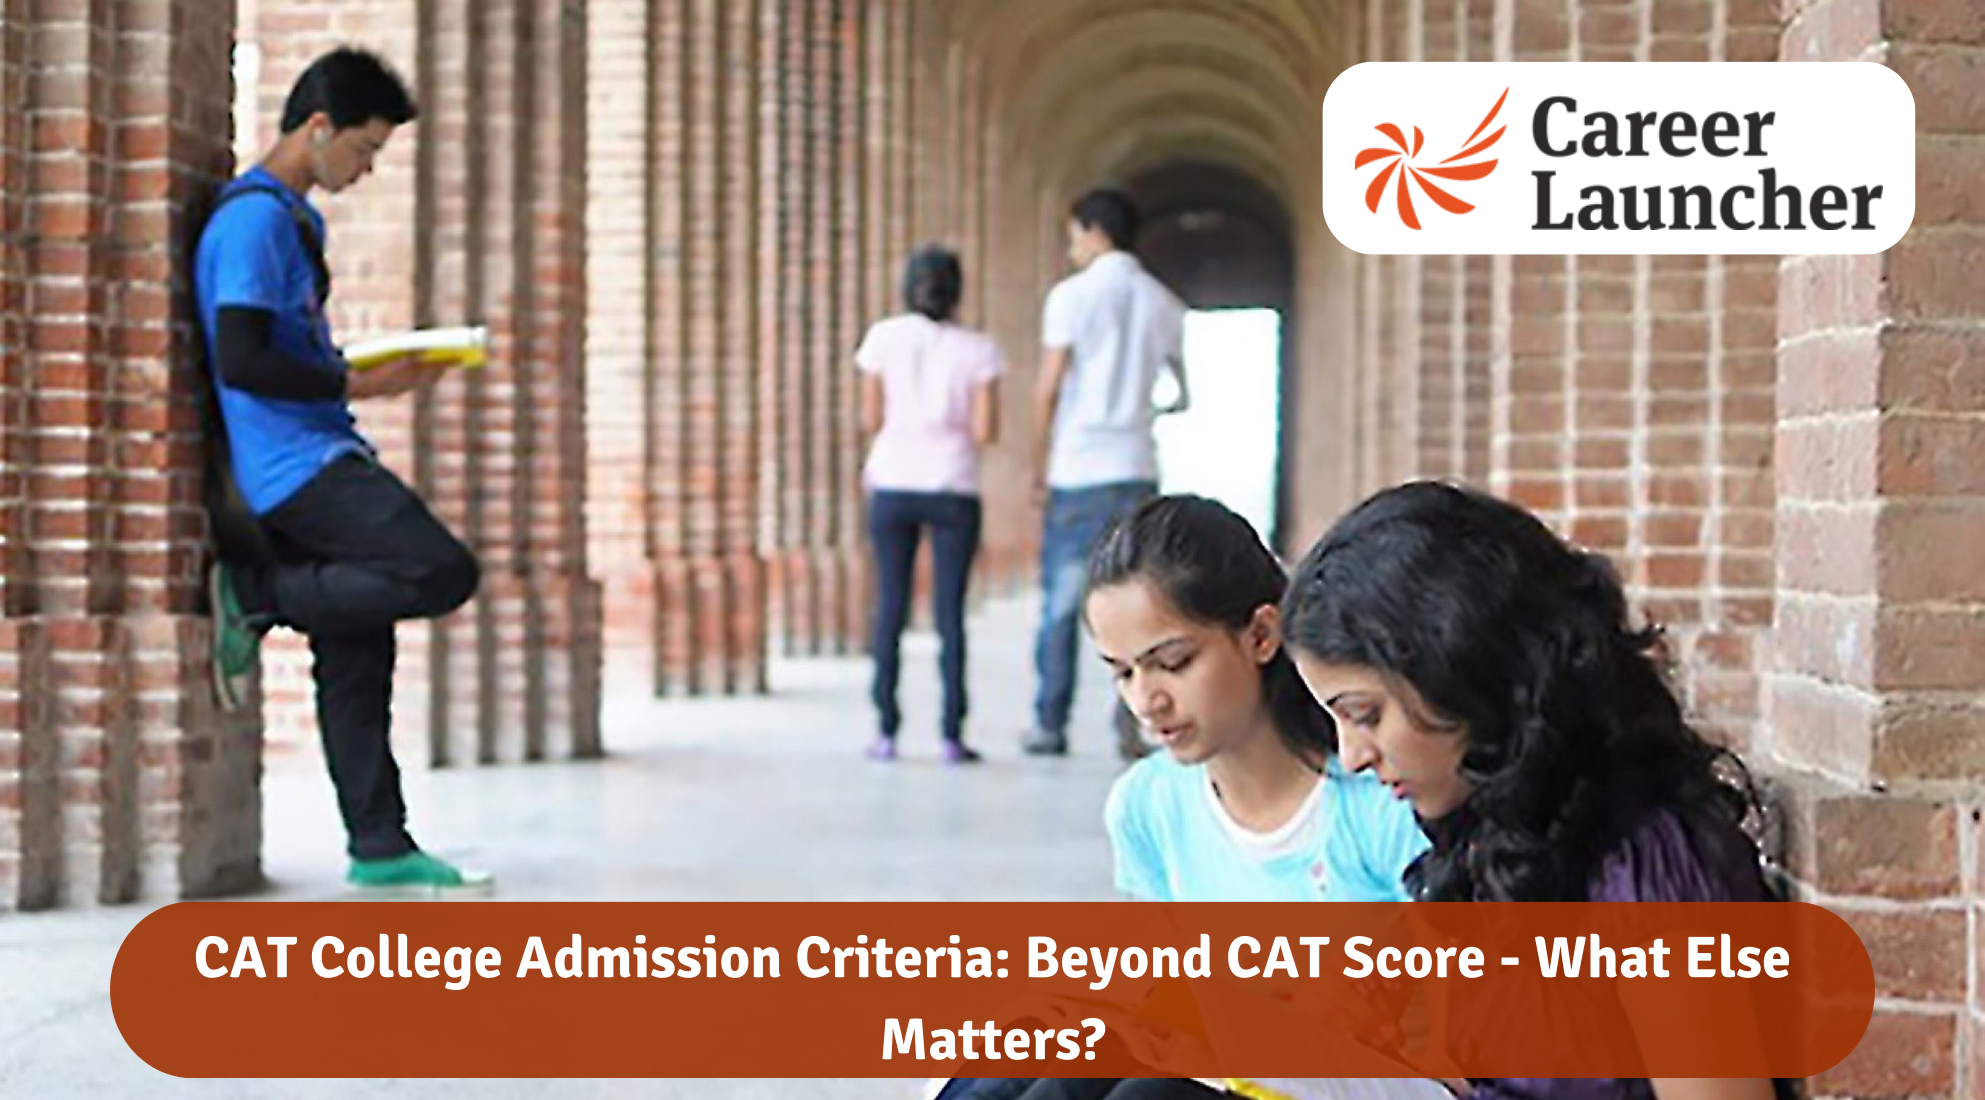 CAT College Admission Criteria: Beyond CAT Score - What Else Matters?